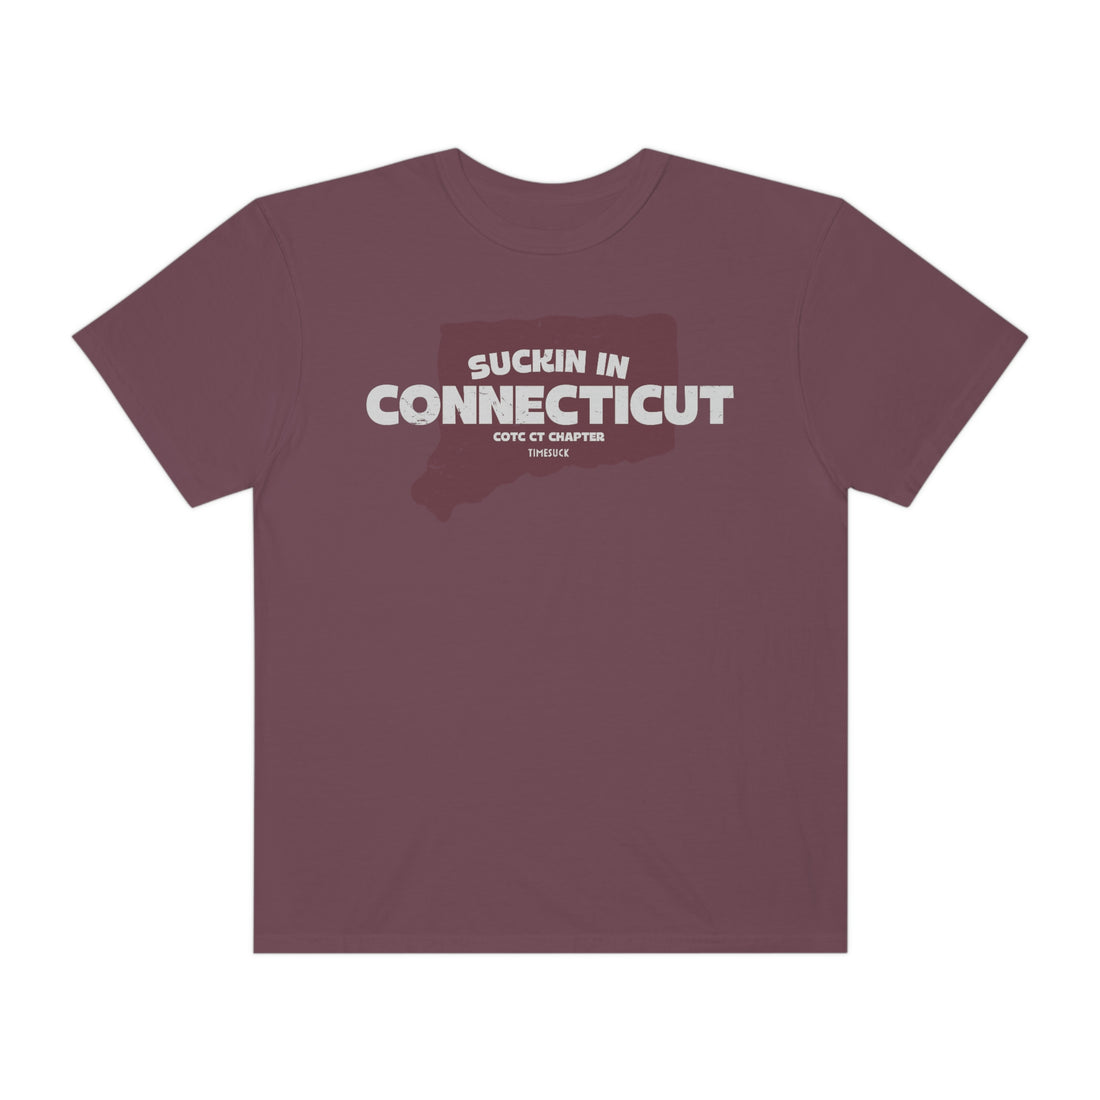 Connecticut Cult Tee